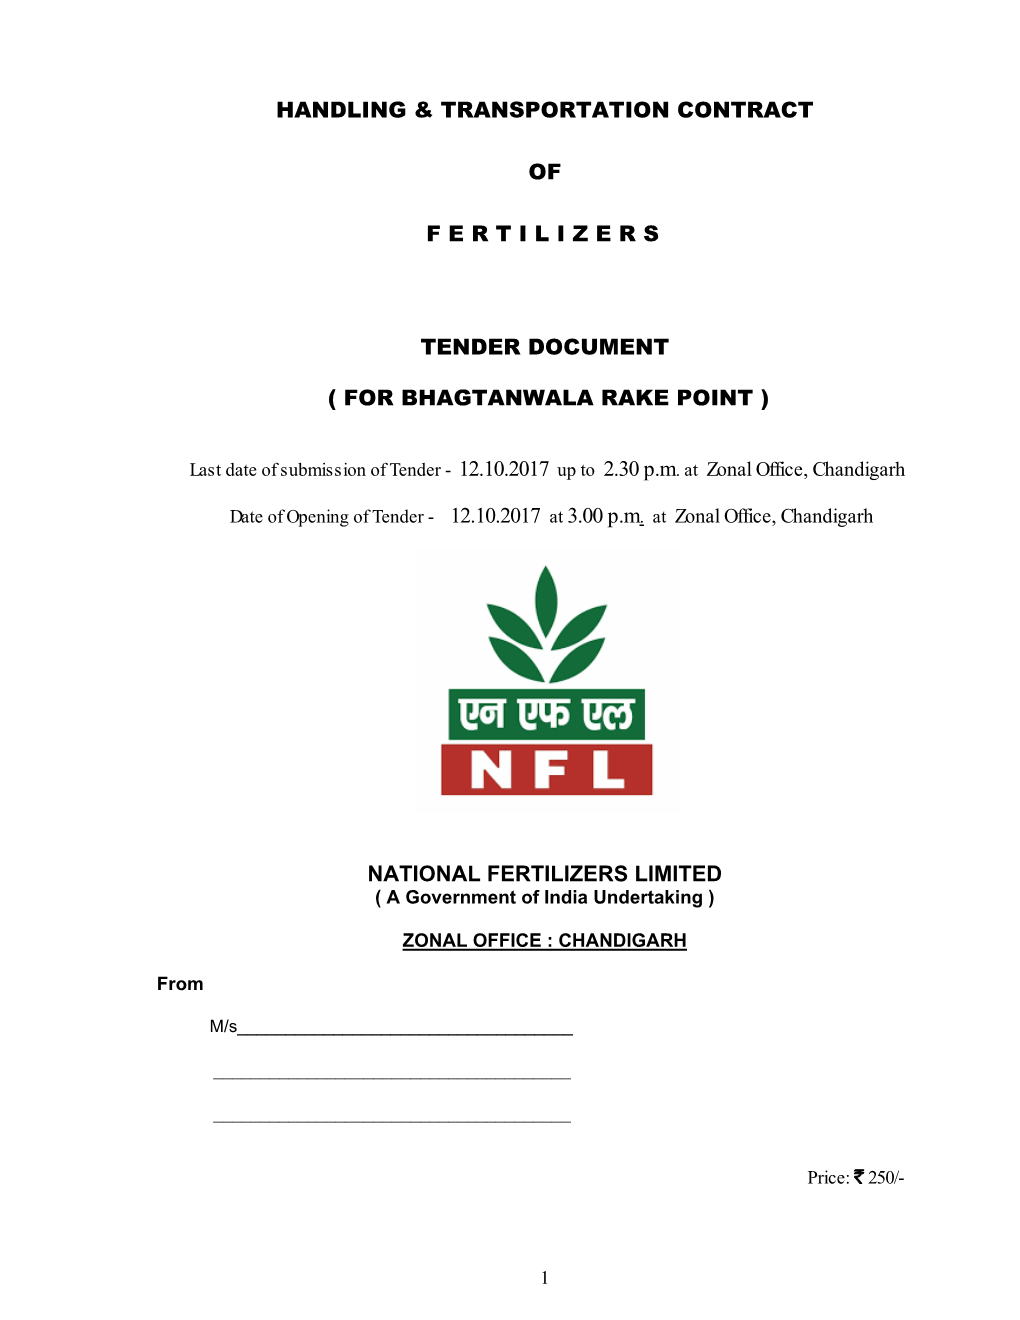 Handling & Transportation Contract of F E R T I L I Z E R S Tender Document ( for Bhagtanwala Rake Point ) National Fertiliz